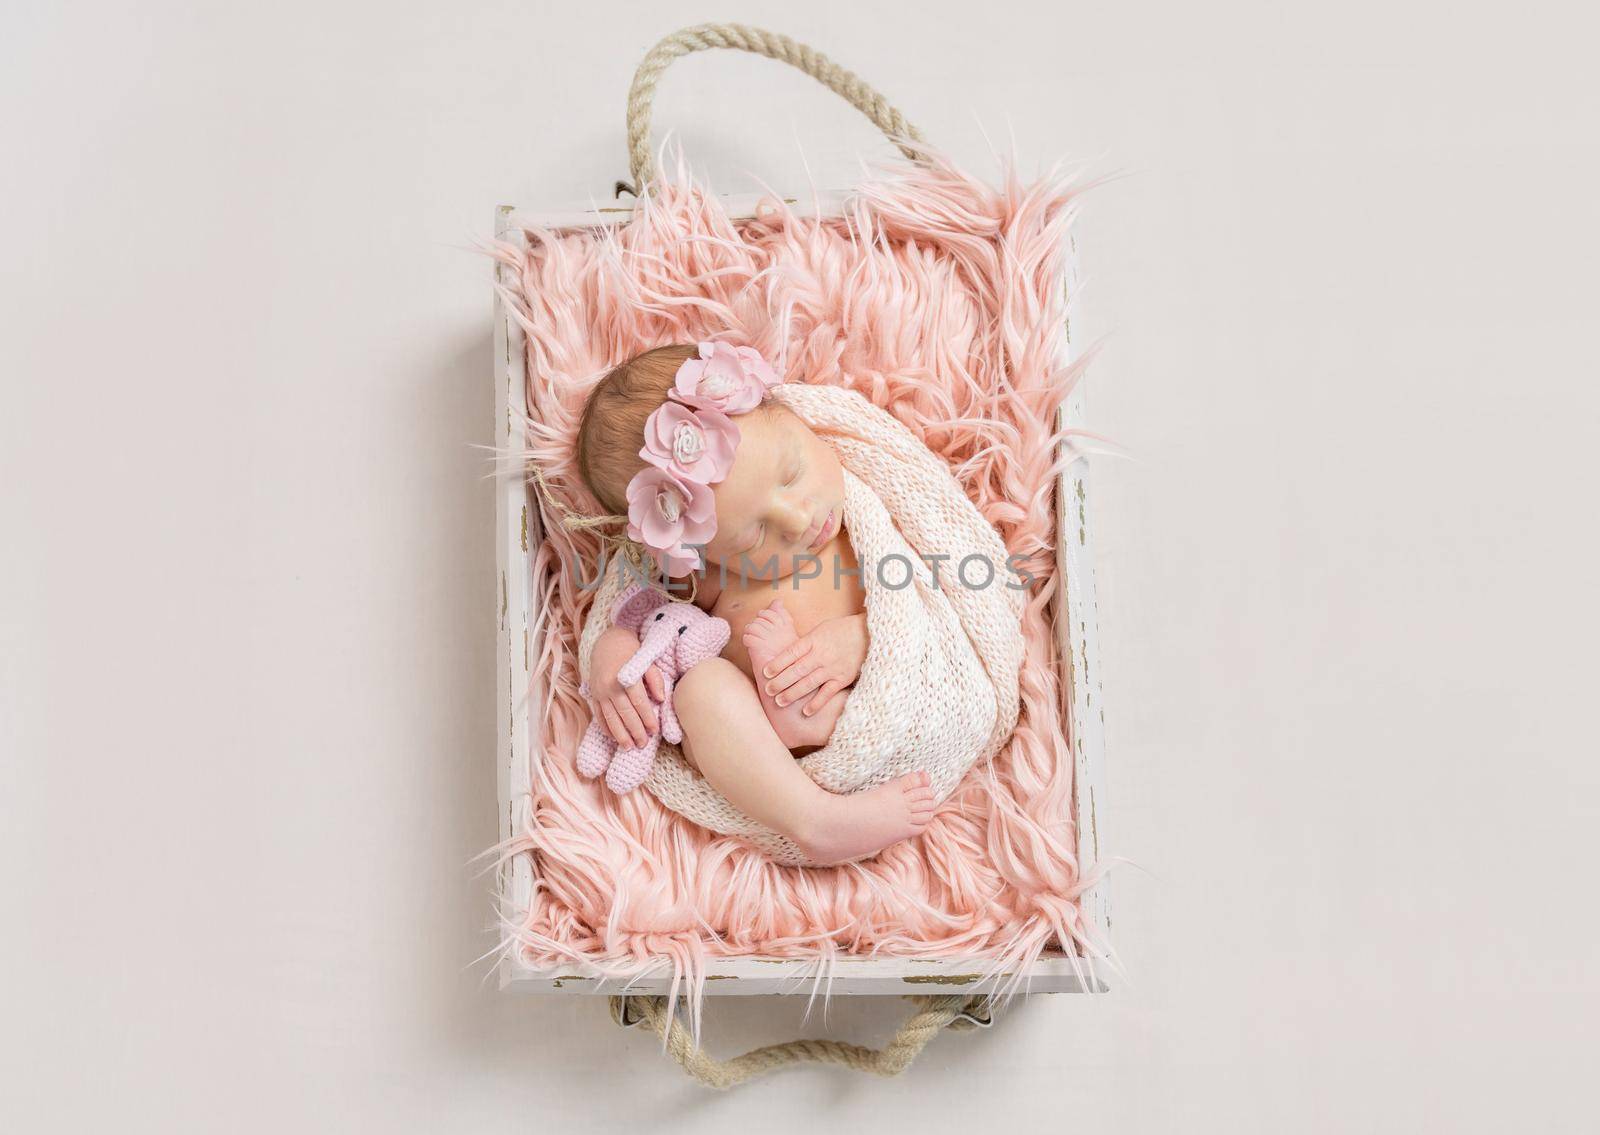 Baby girl on soft pink blanket, topview by tan4ikk1